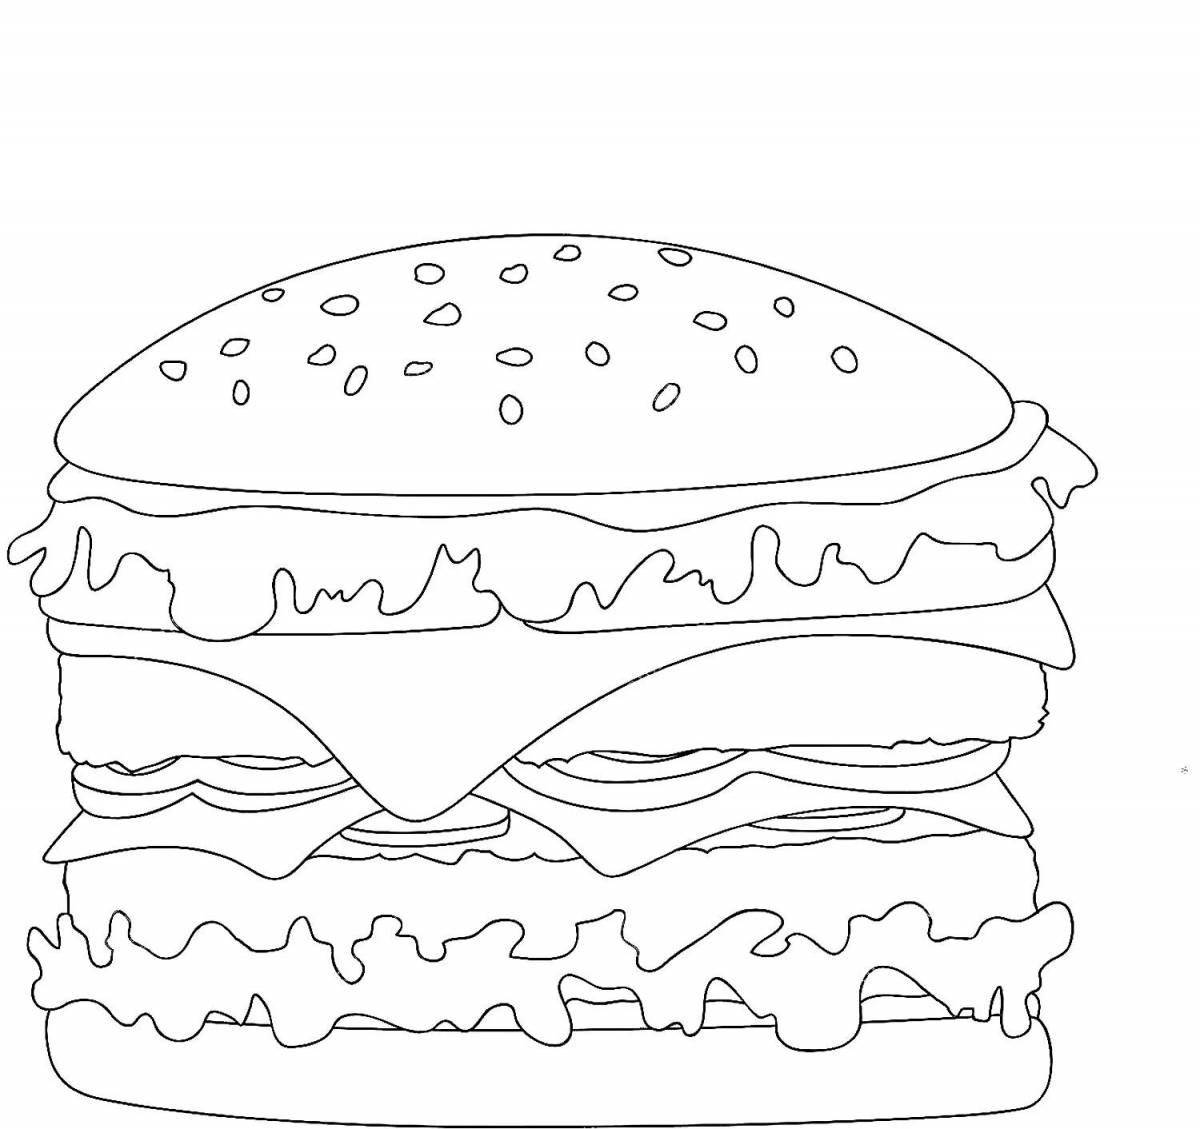 Веселая страница раскраски burger king